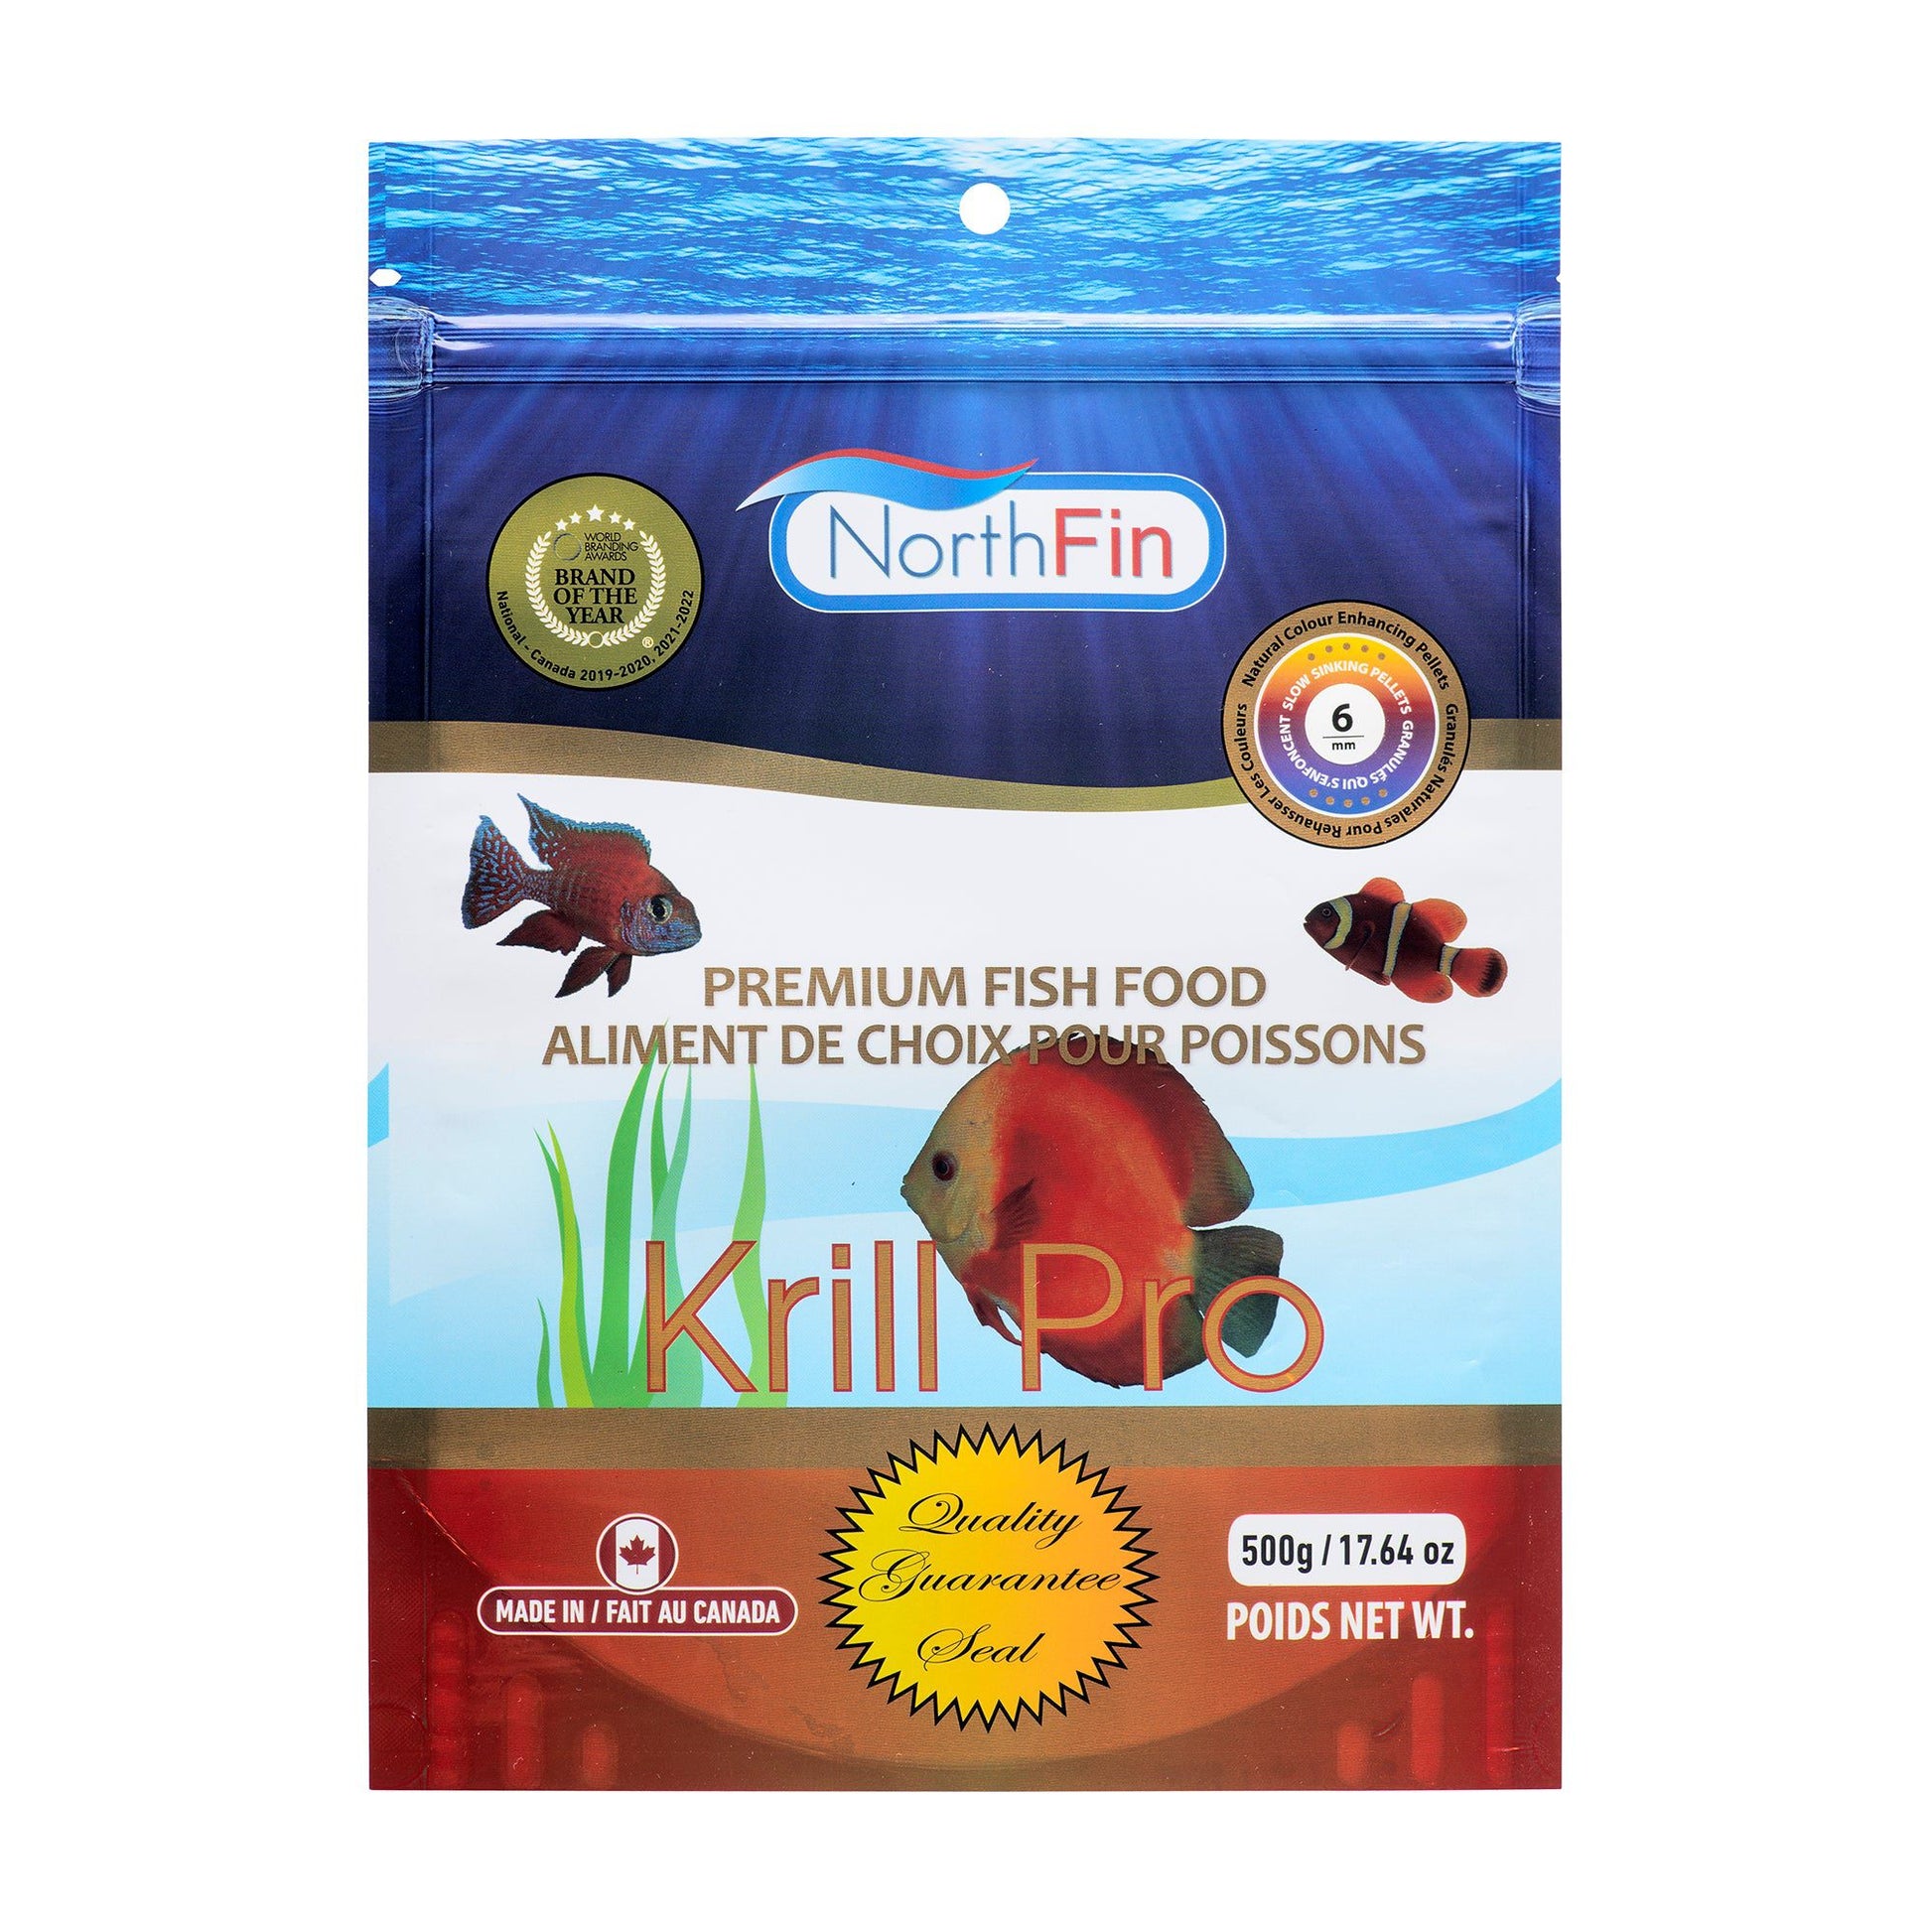 NorthFin Fish Food Krill Pro Slow Sinking Pellets 6mm / 500g 799975505961 Super Cichlids